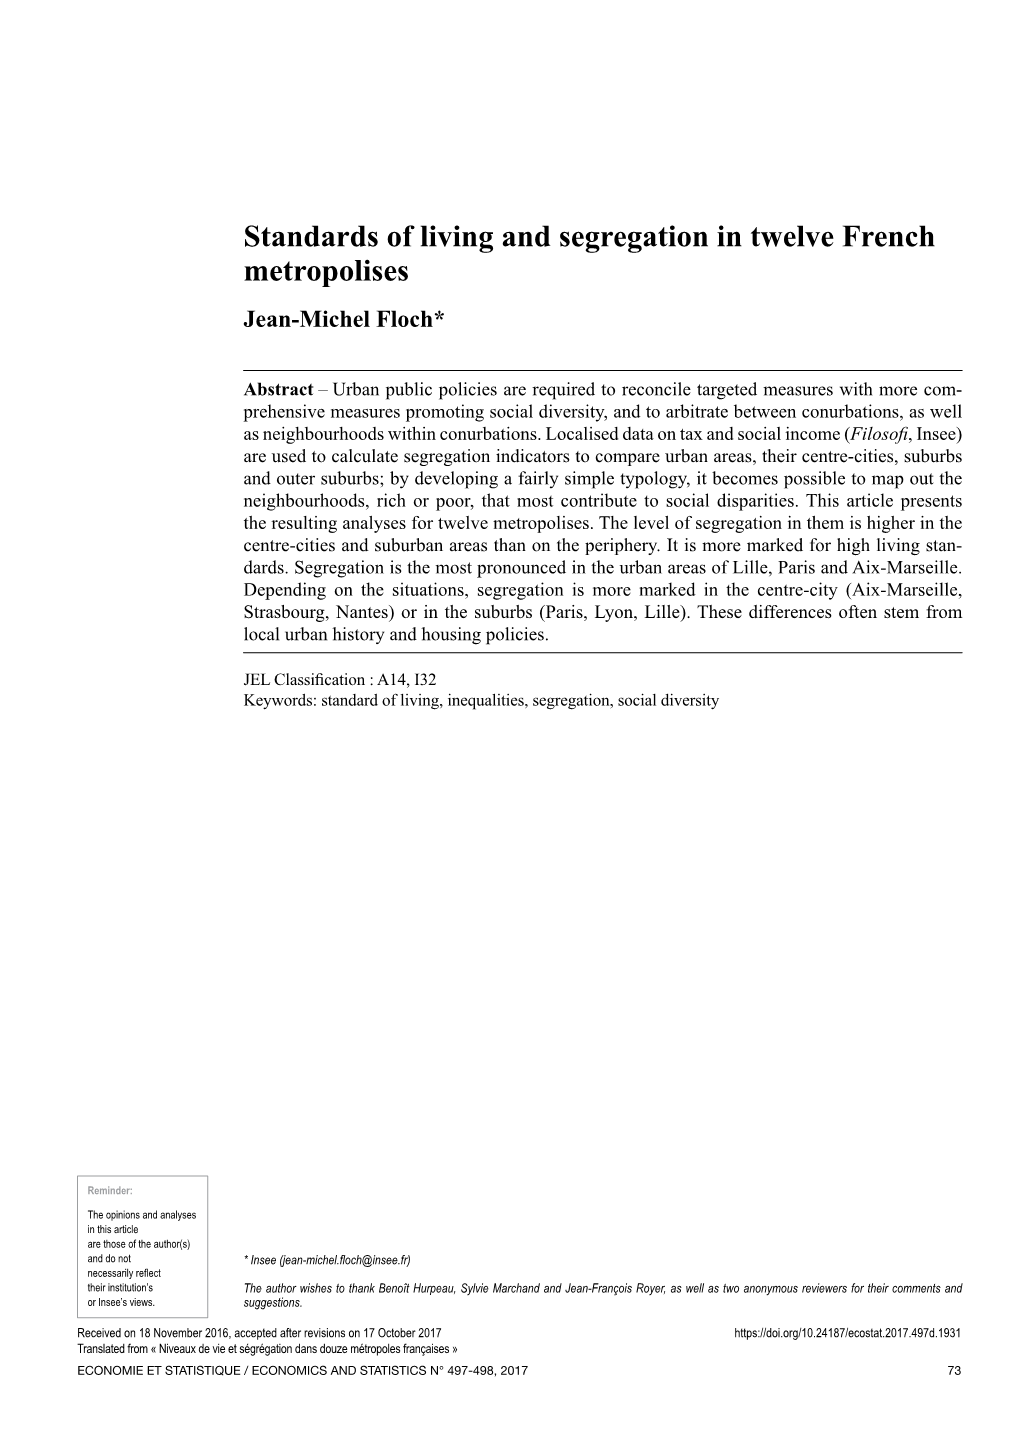 Standards of Living and Segregation in Twelve French Metropolises Jean‑Michel Floch*